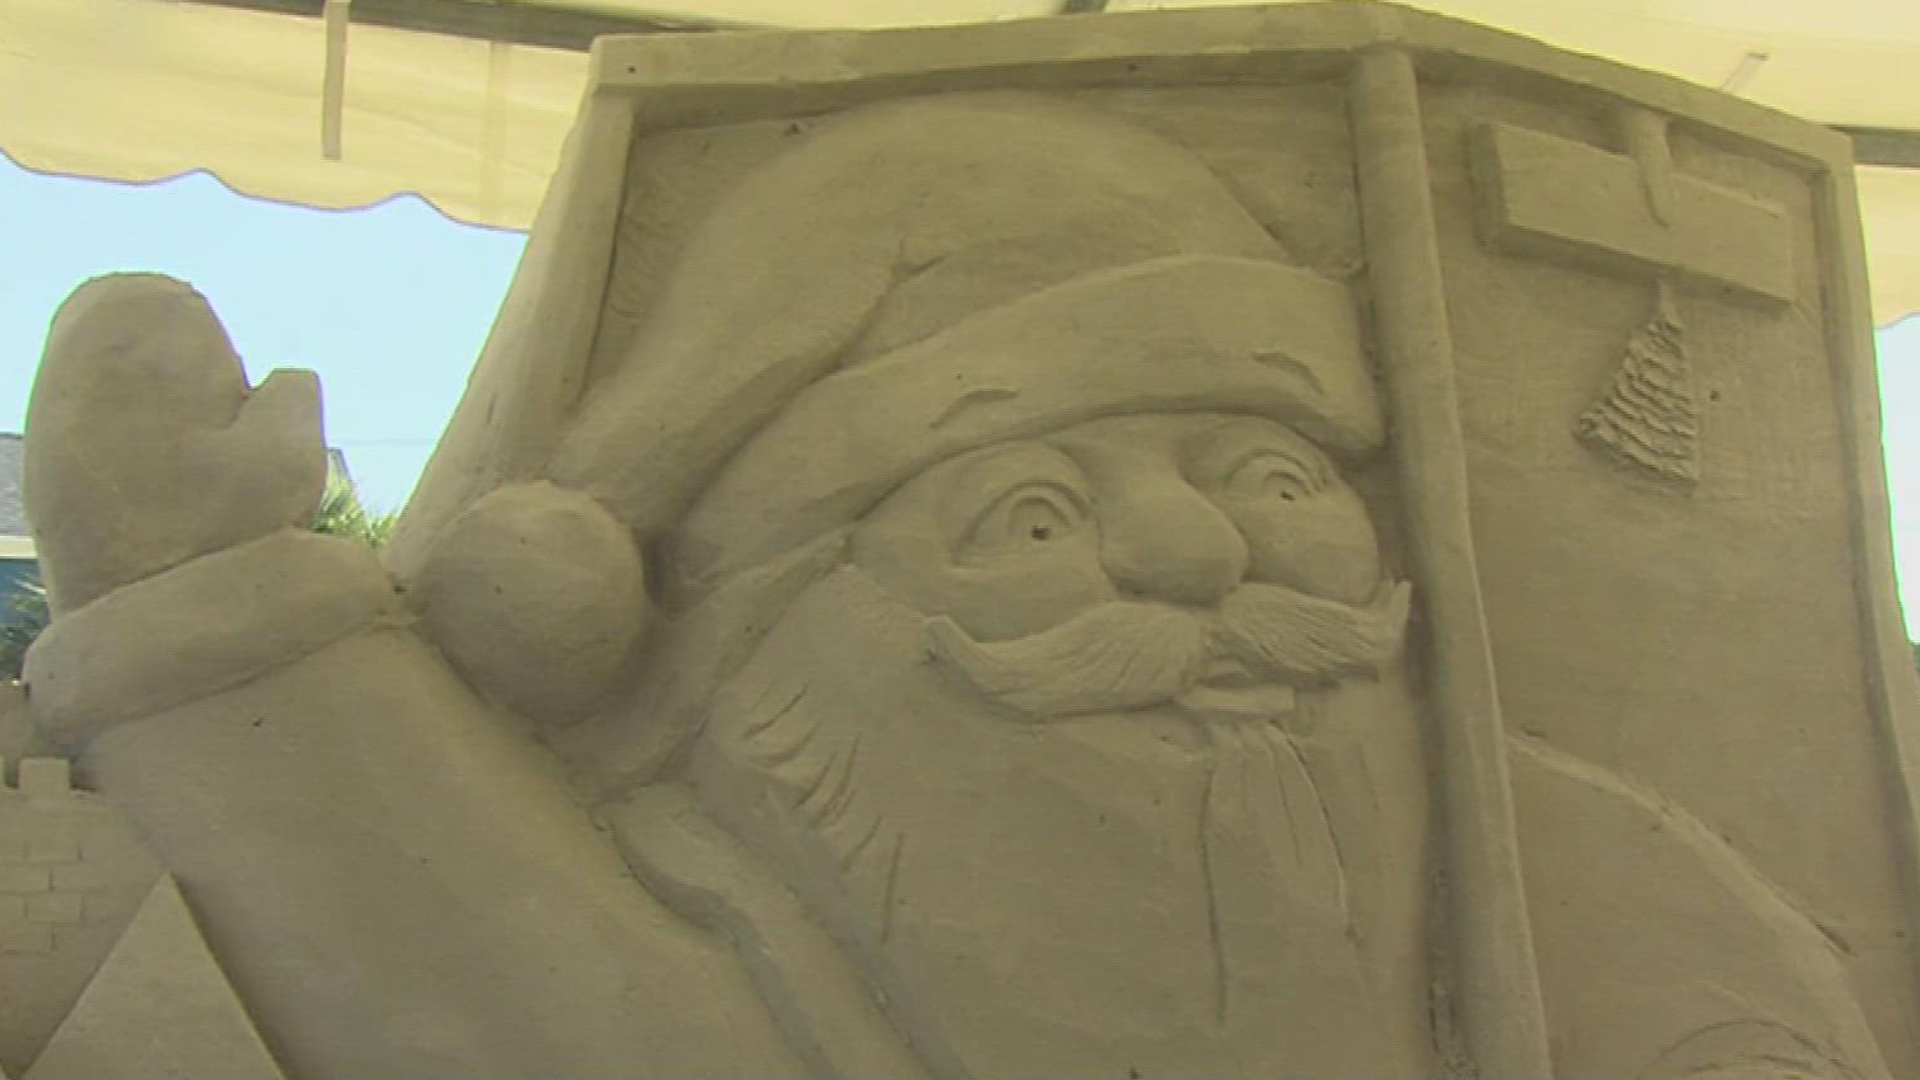 Santa sand sculpture on display in Port Aransas